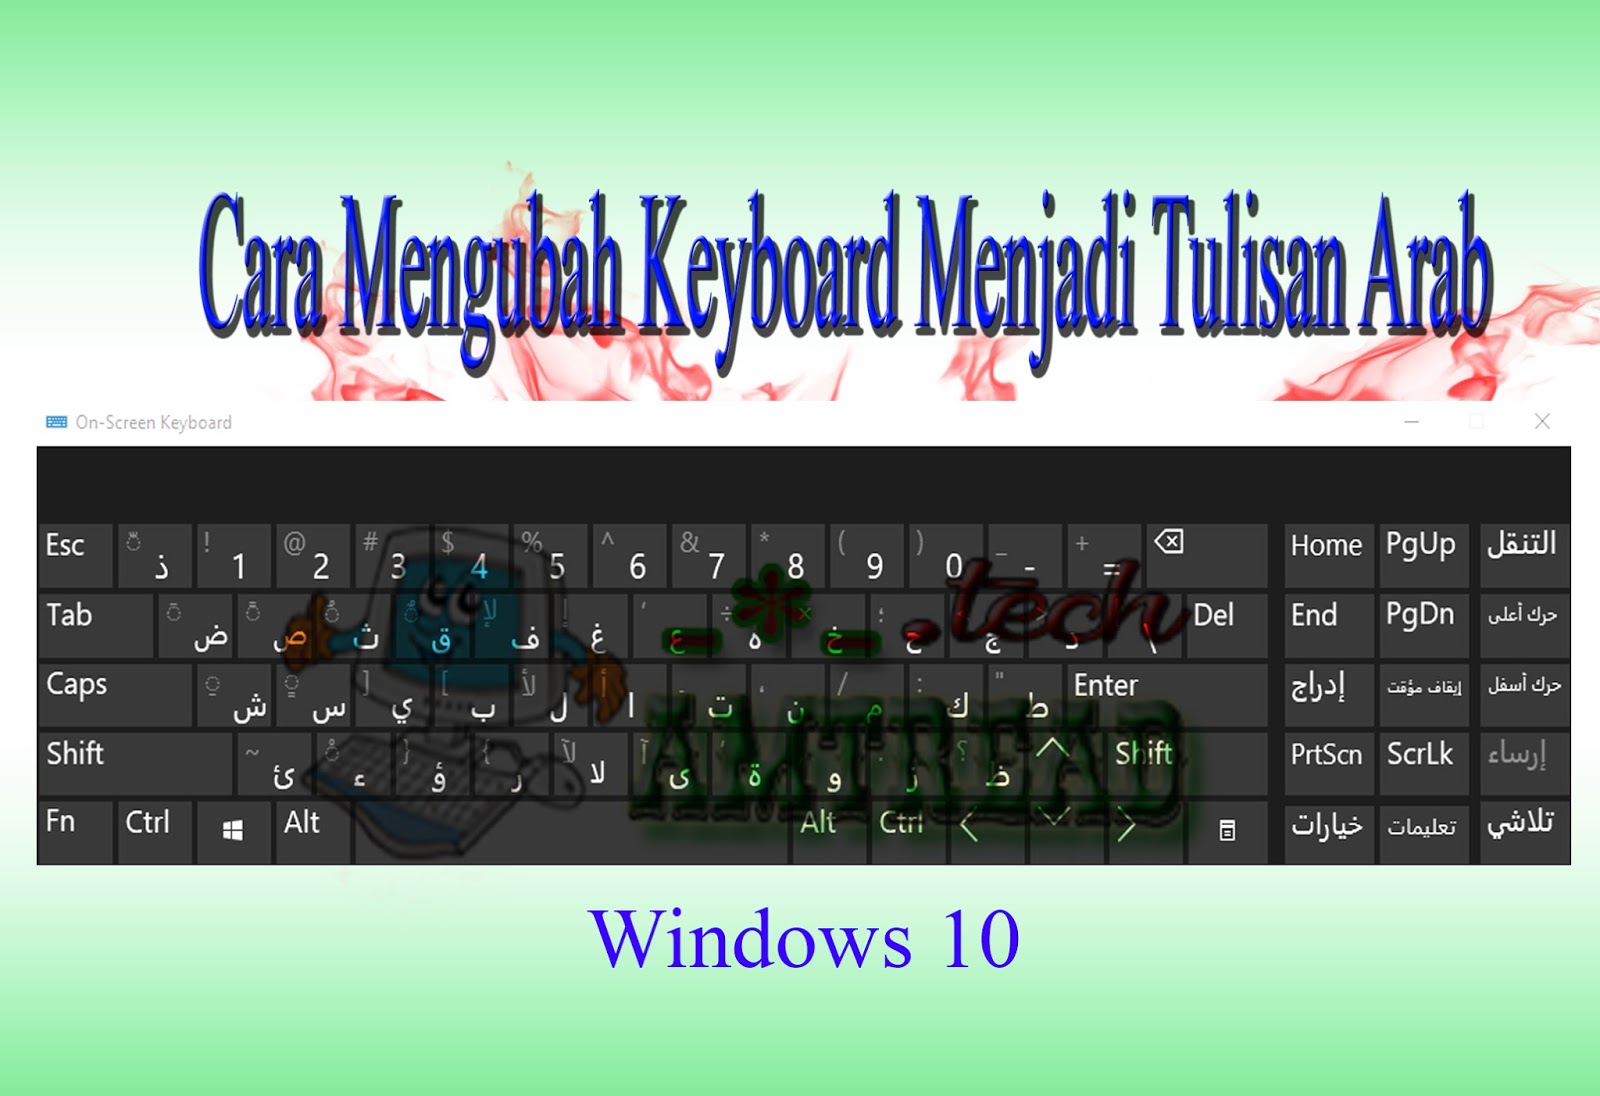 Не видны клавиши дота 2. Исламская клавиатура. Arabic Keyboard for Windows 10. Keyboard Emulator Android.